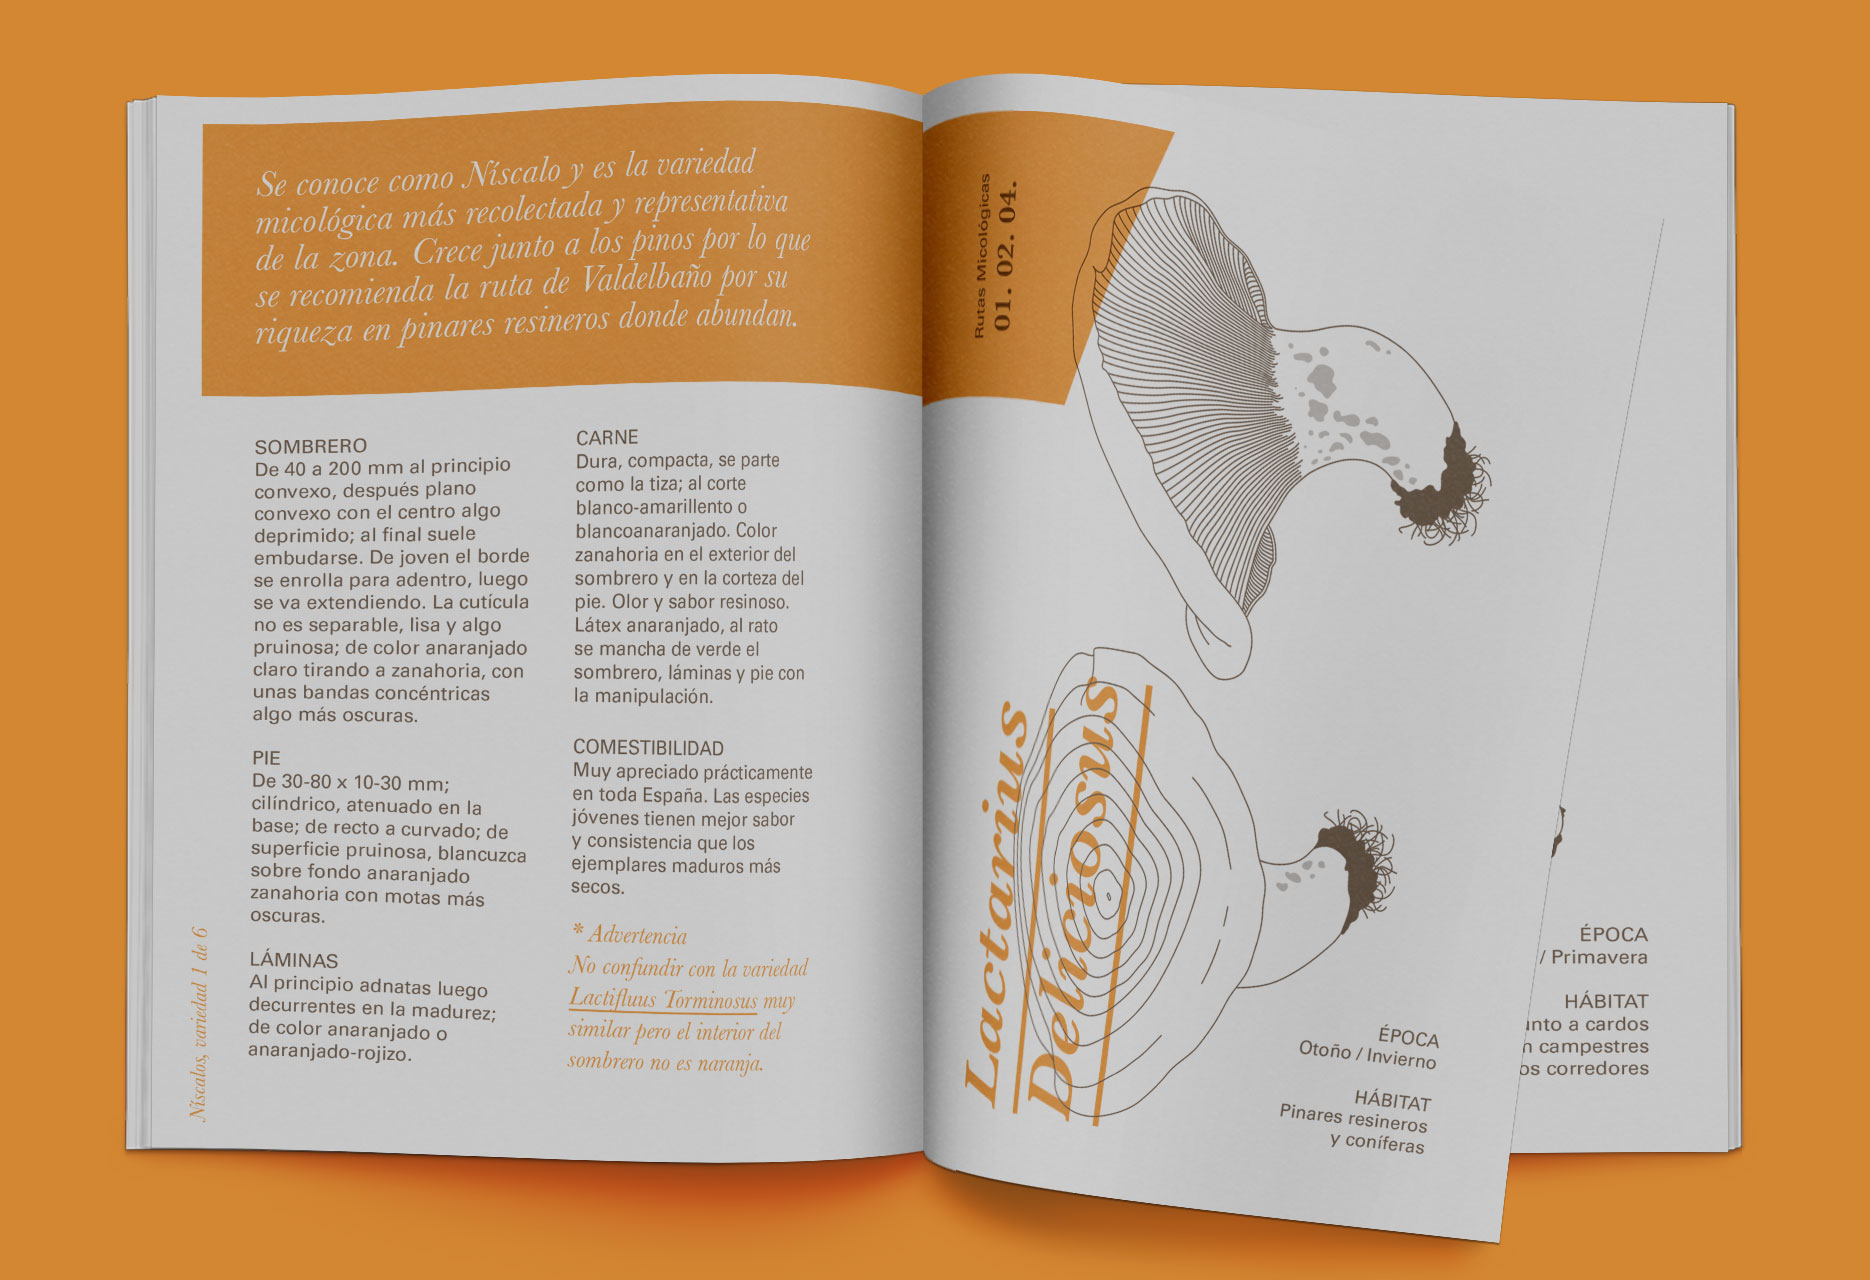 Brand design and mycological guide Tierras de Berlanga - publishing design / branding / illustration - 2015